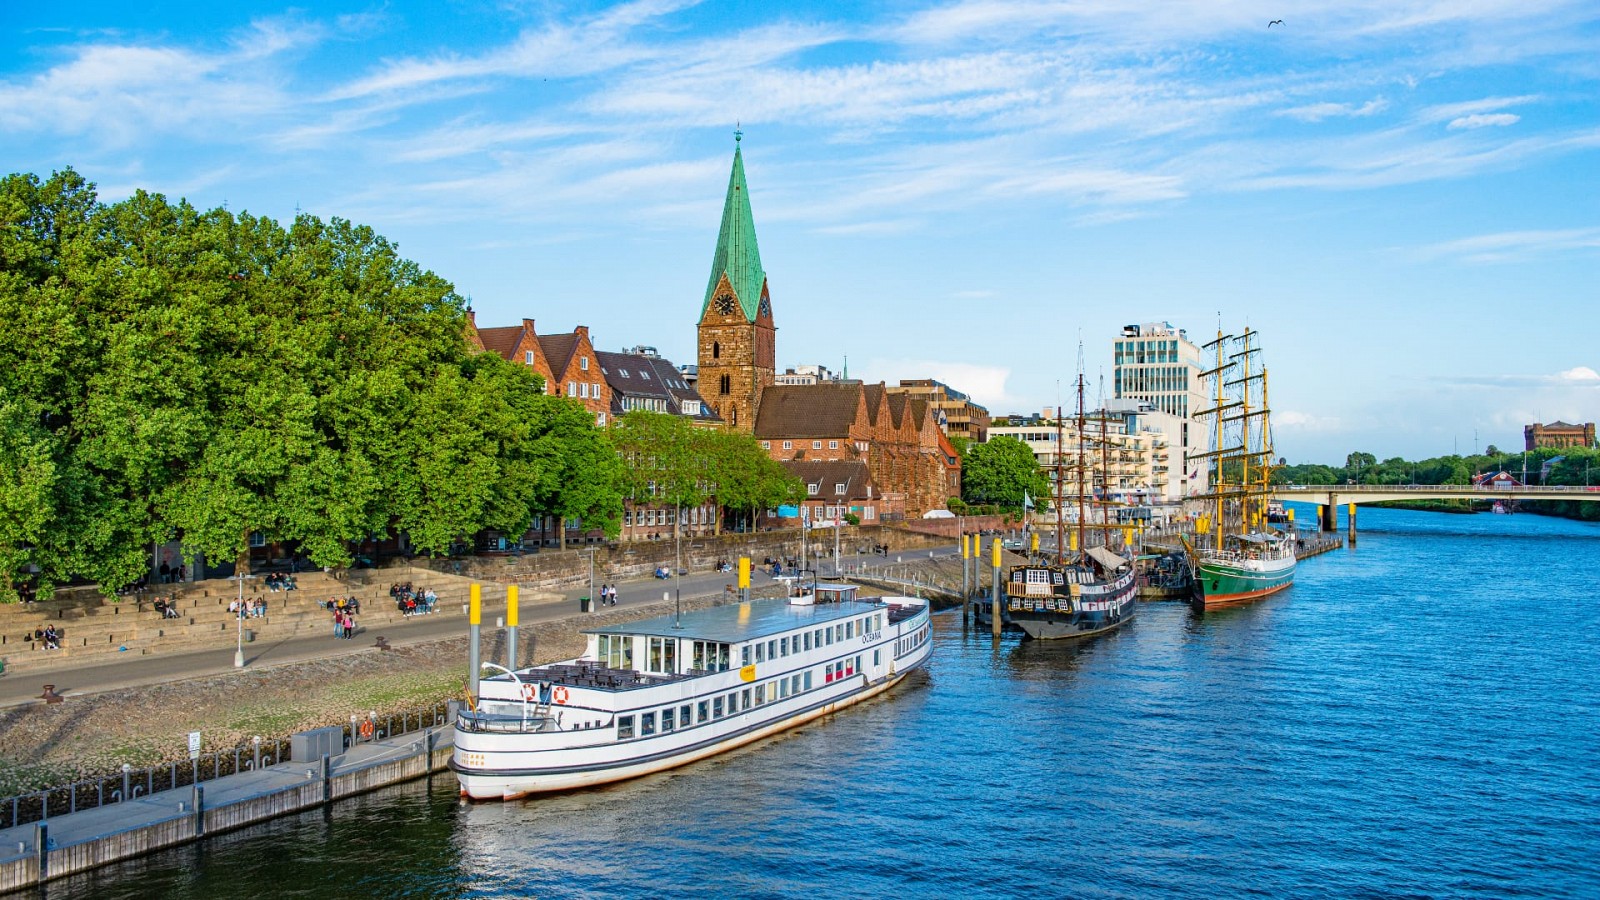 Perfect for a city break in Bremen: Beautiful riverside promenade